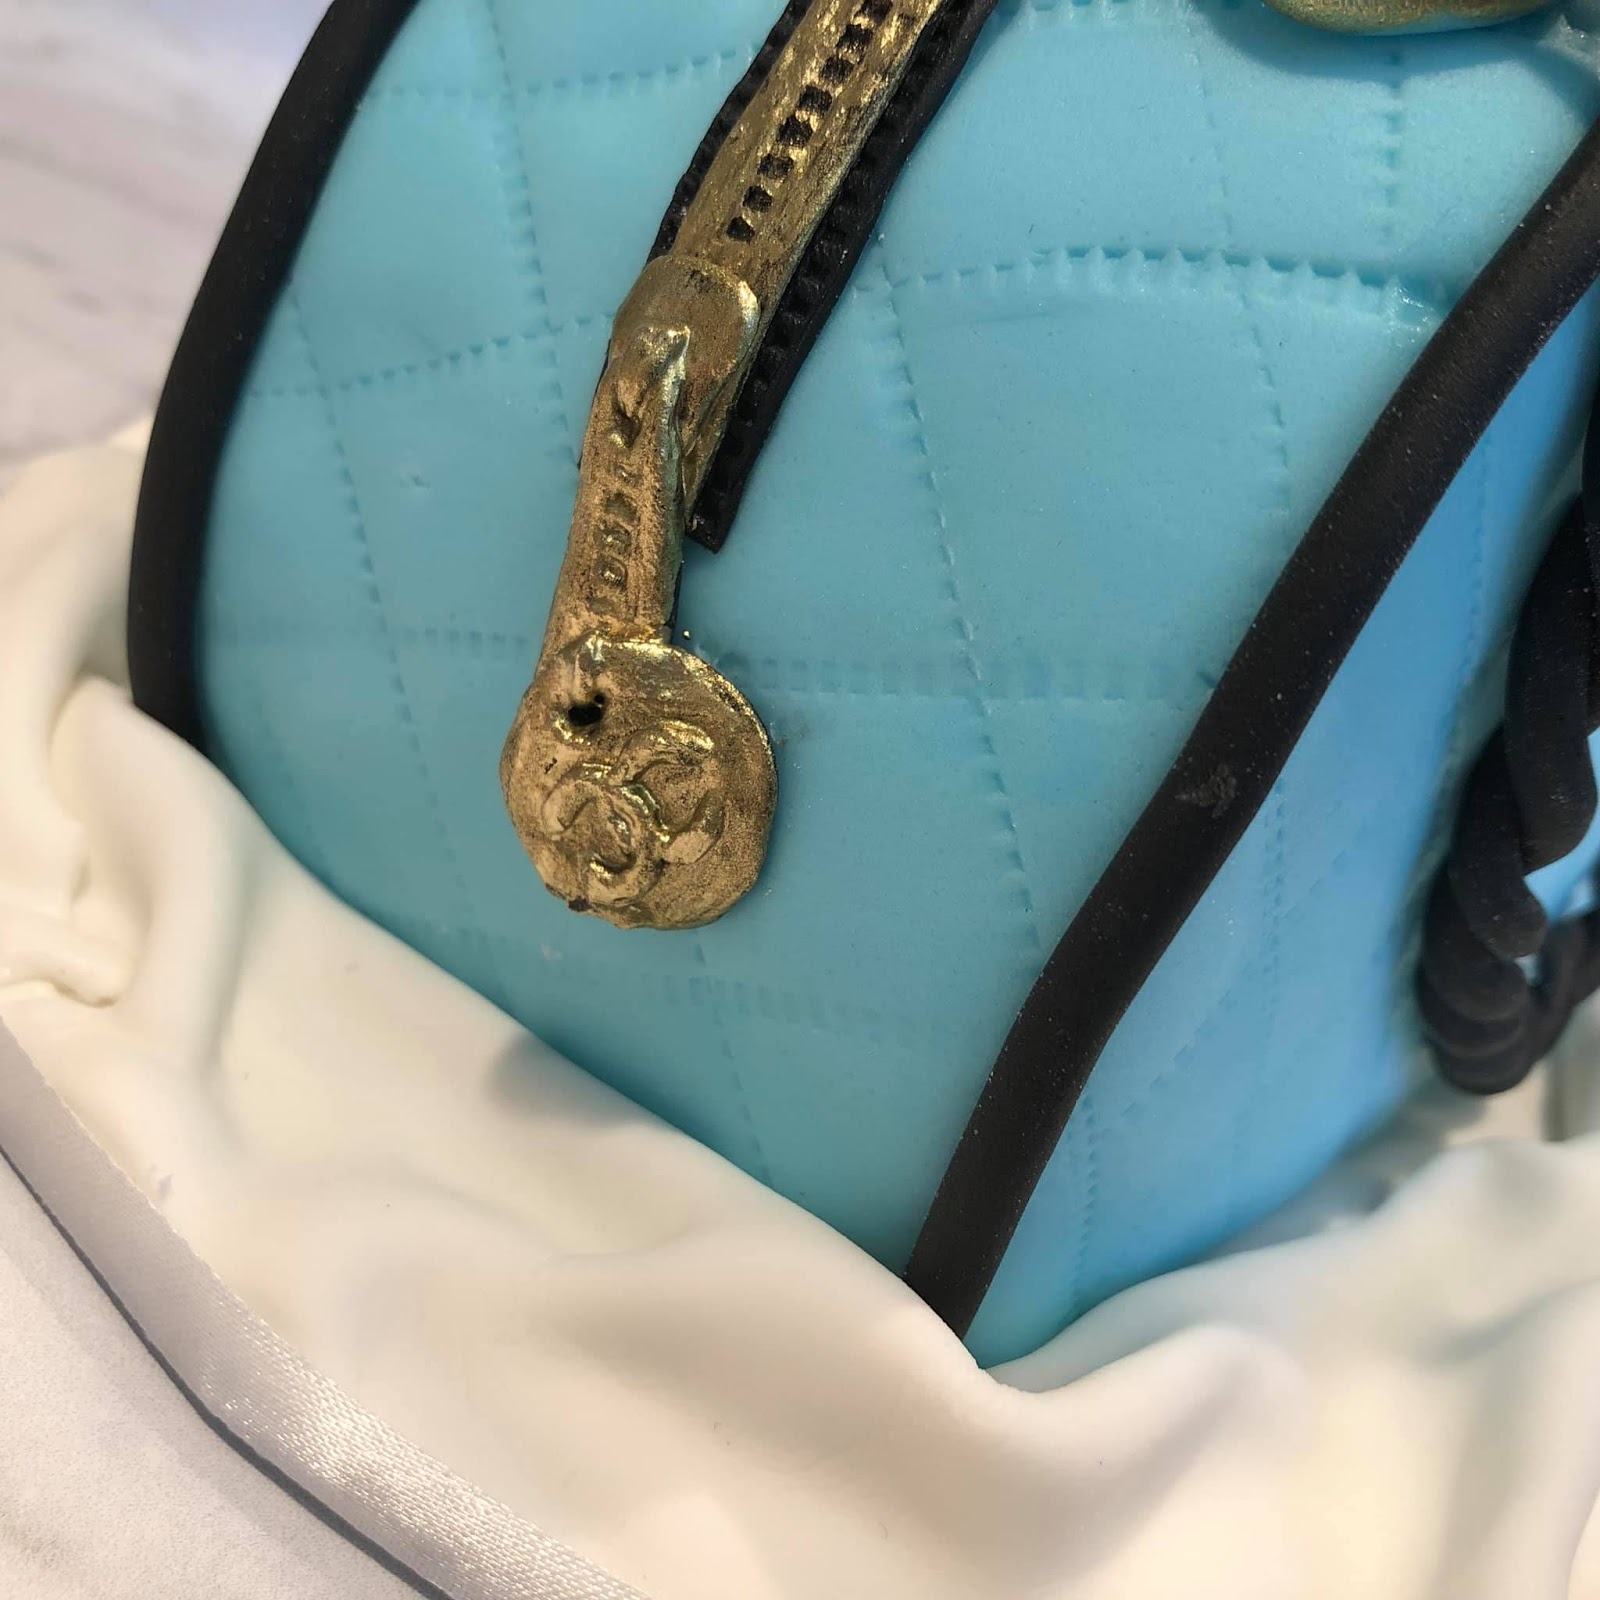 Quilted Blue Chanel Handbag Cake